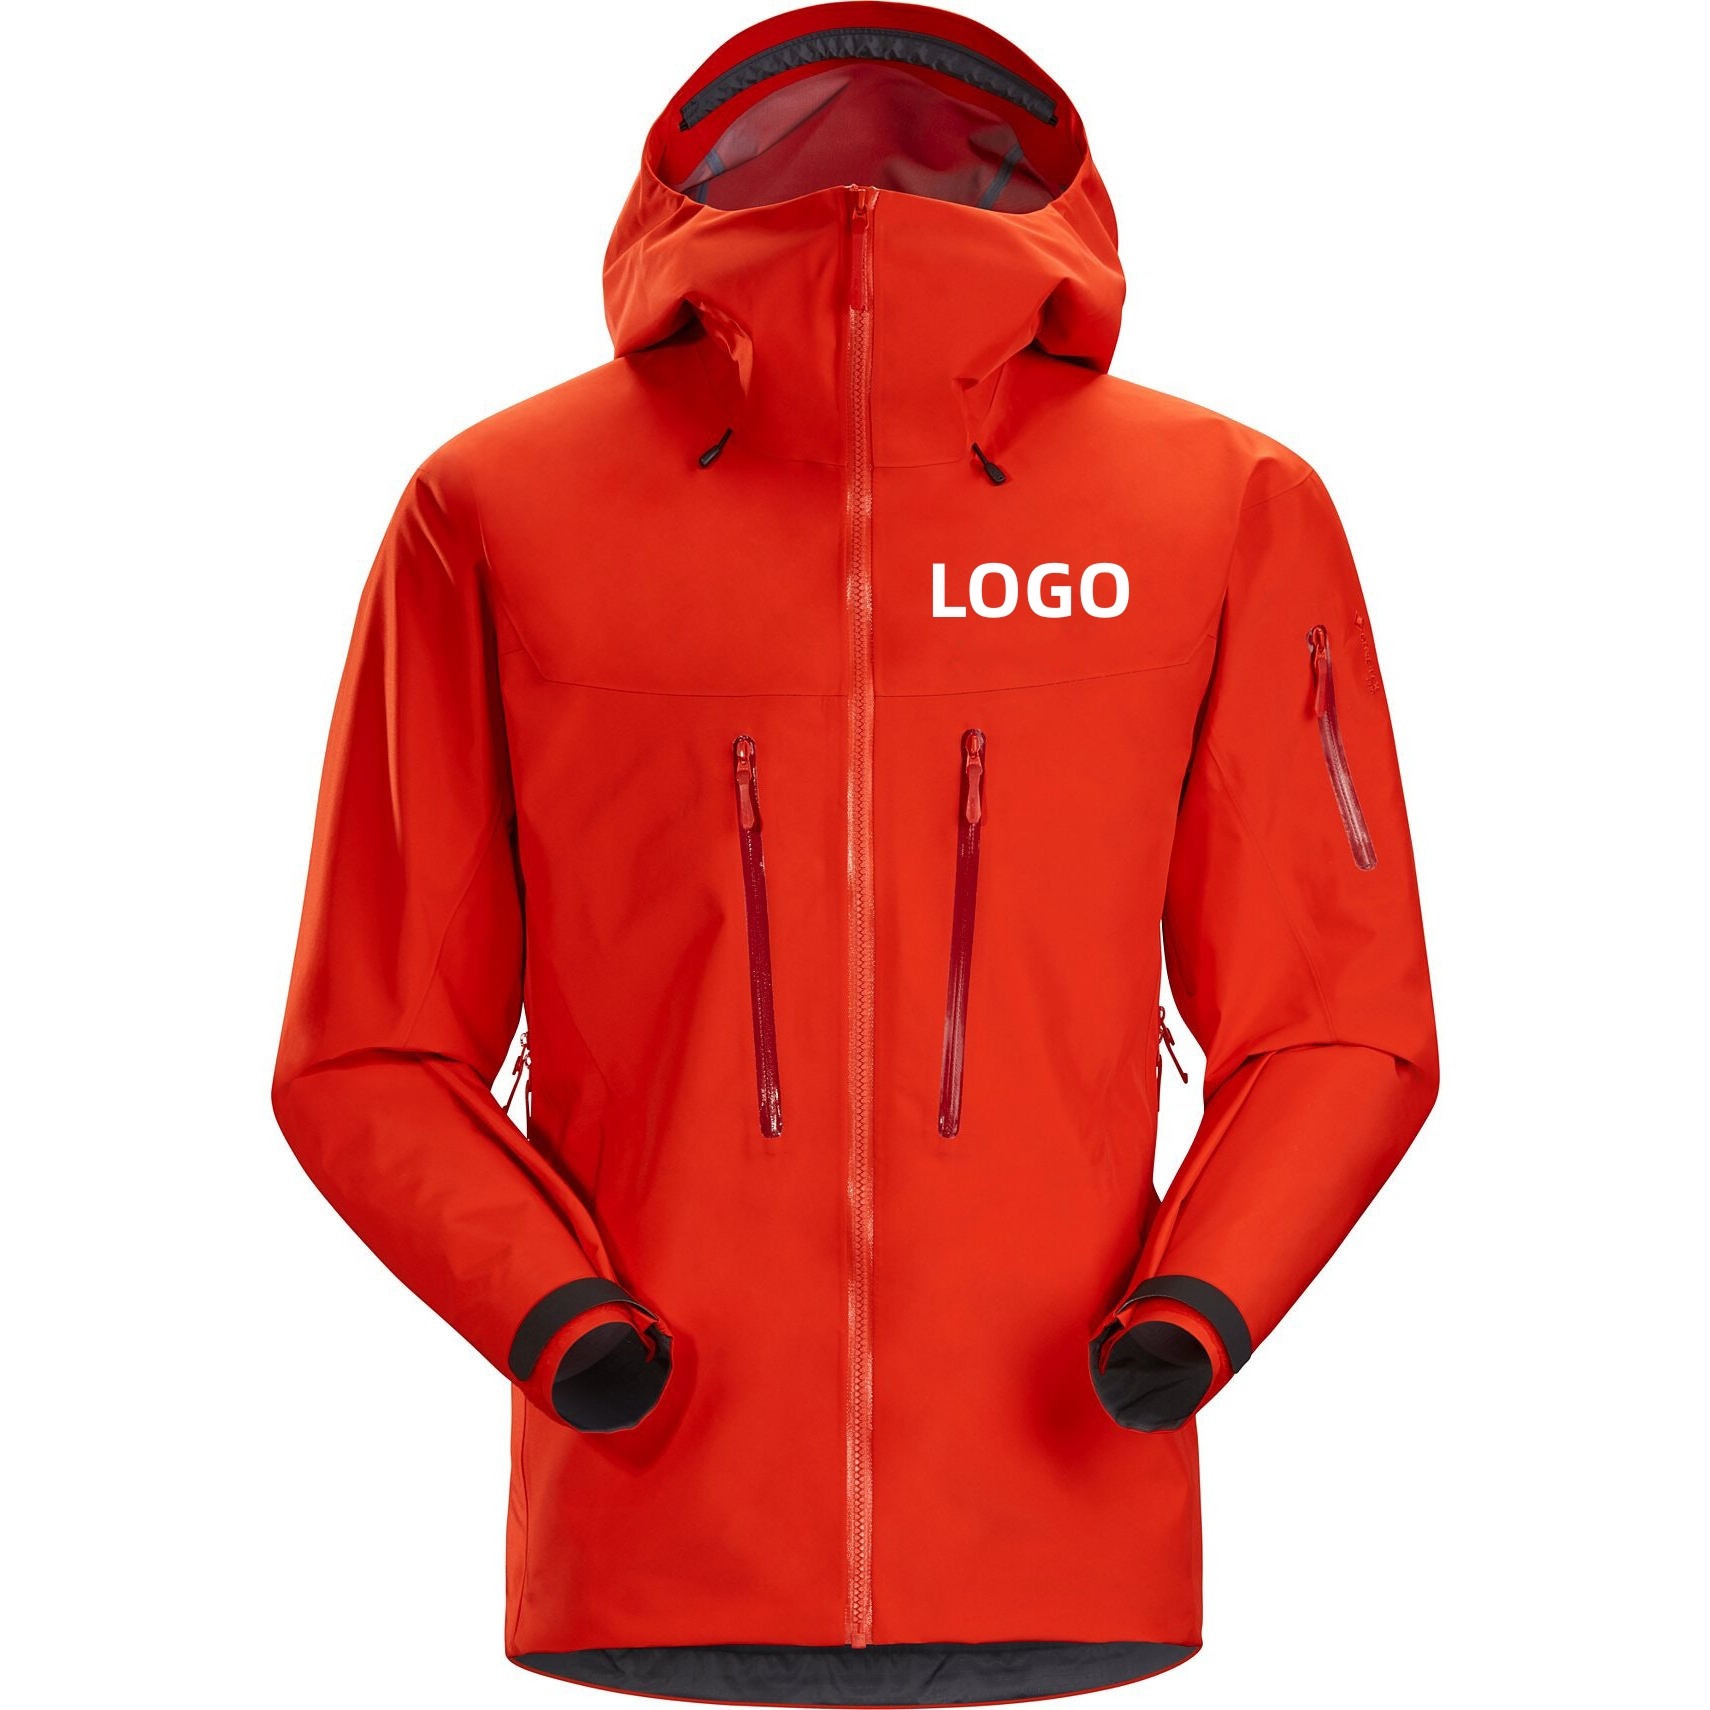 Buy cheap Men's Waterproof Jacket Outdoor Sport Soft Shell With Hood Jacket Running Hiking Rain Jacket windbreaker product